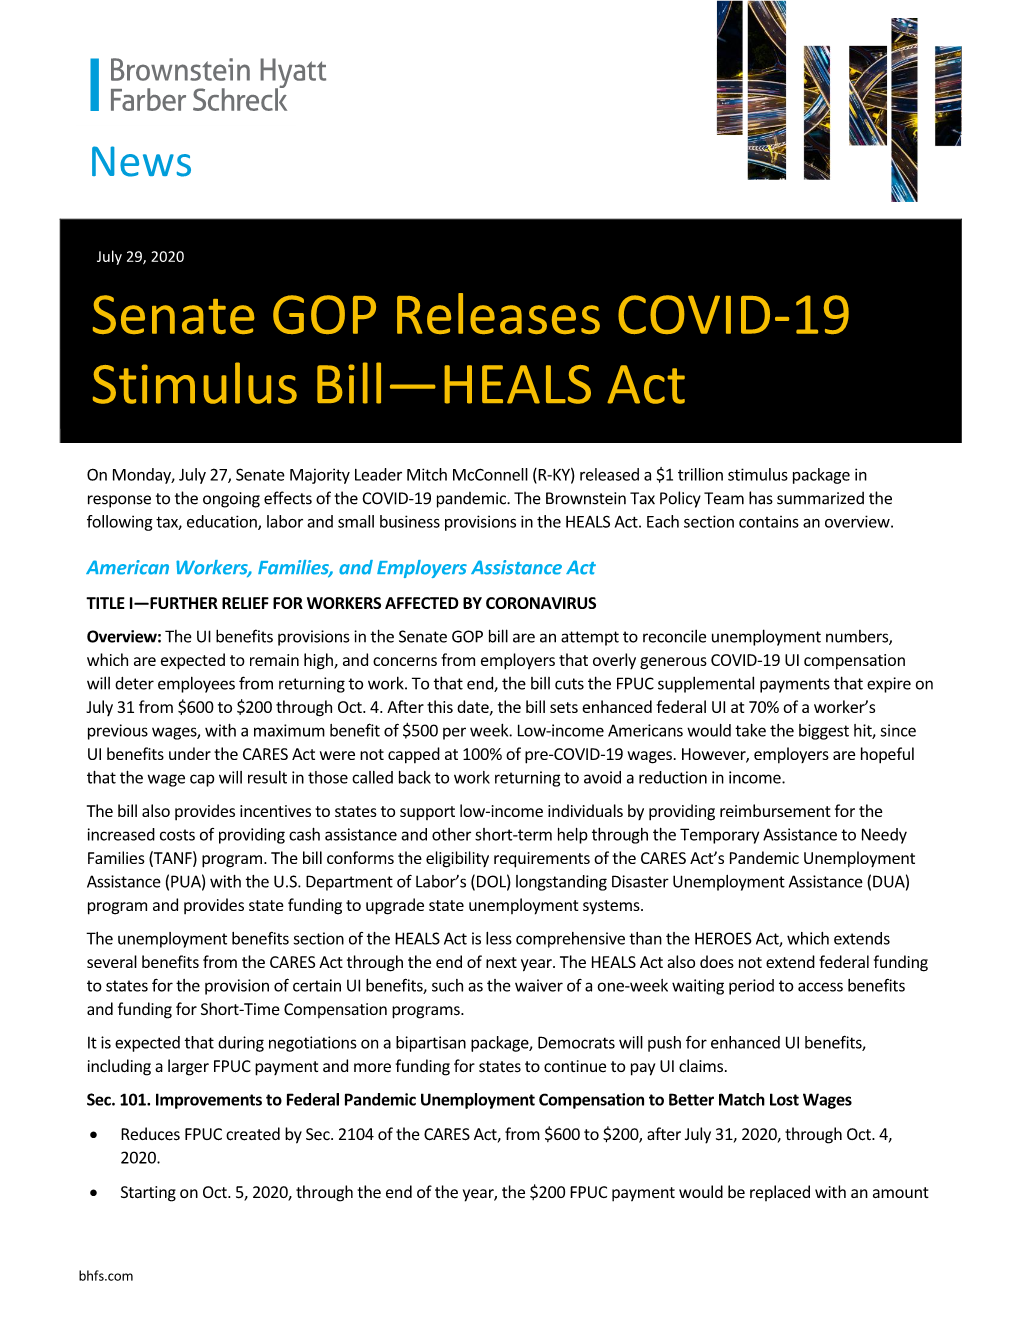 Senate GOP Releases COVID-19 Stimulus Bill—HEALS Act